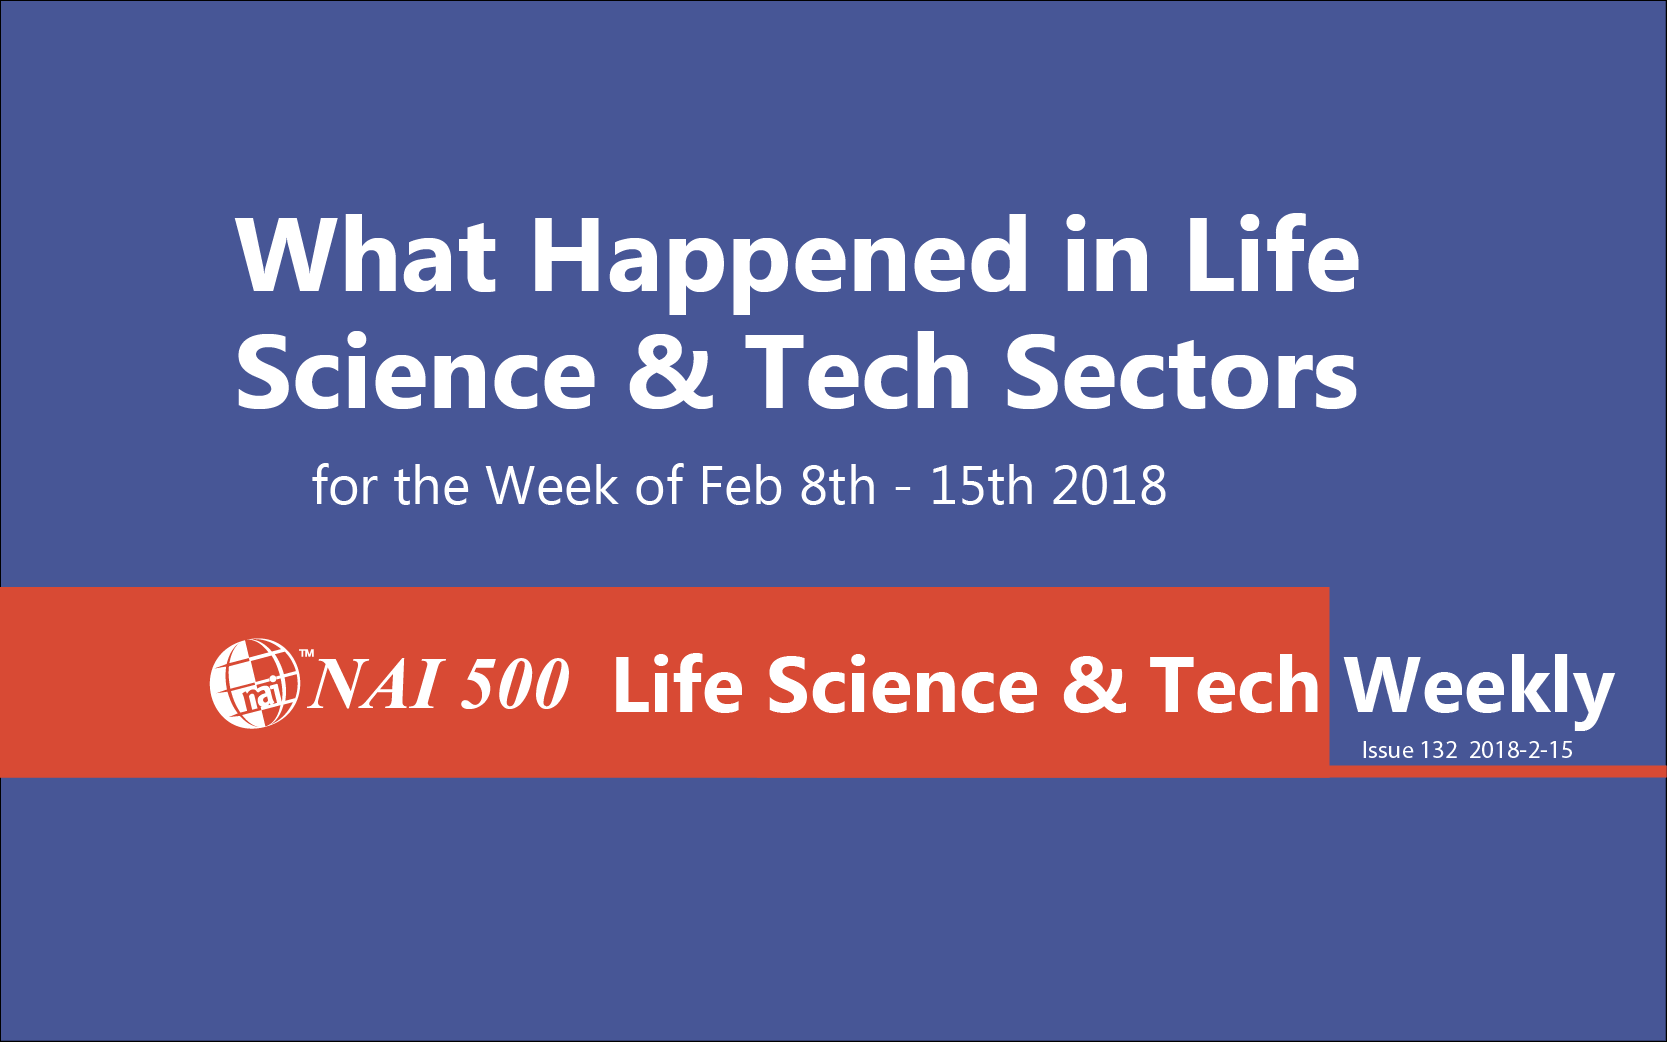 Life Science Weekly - www.nai500.com